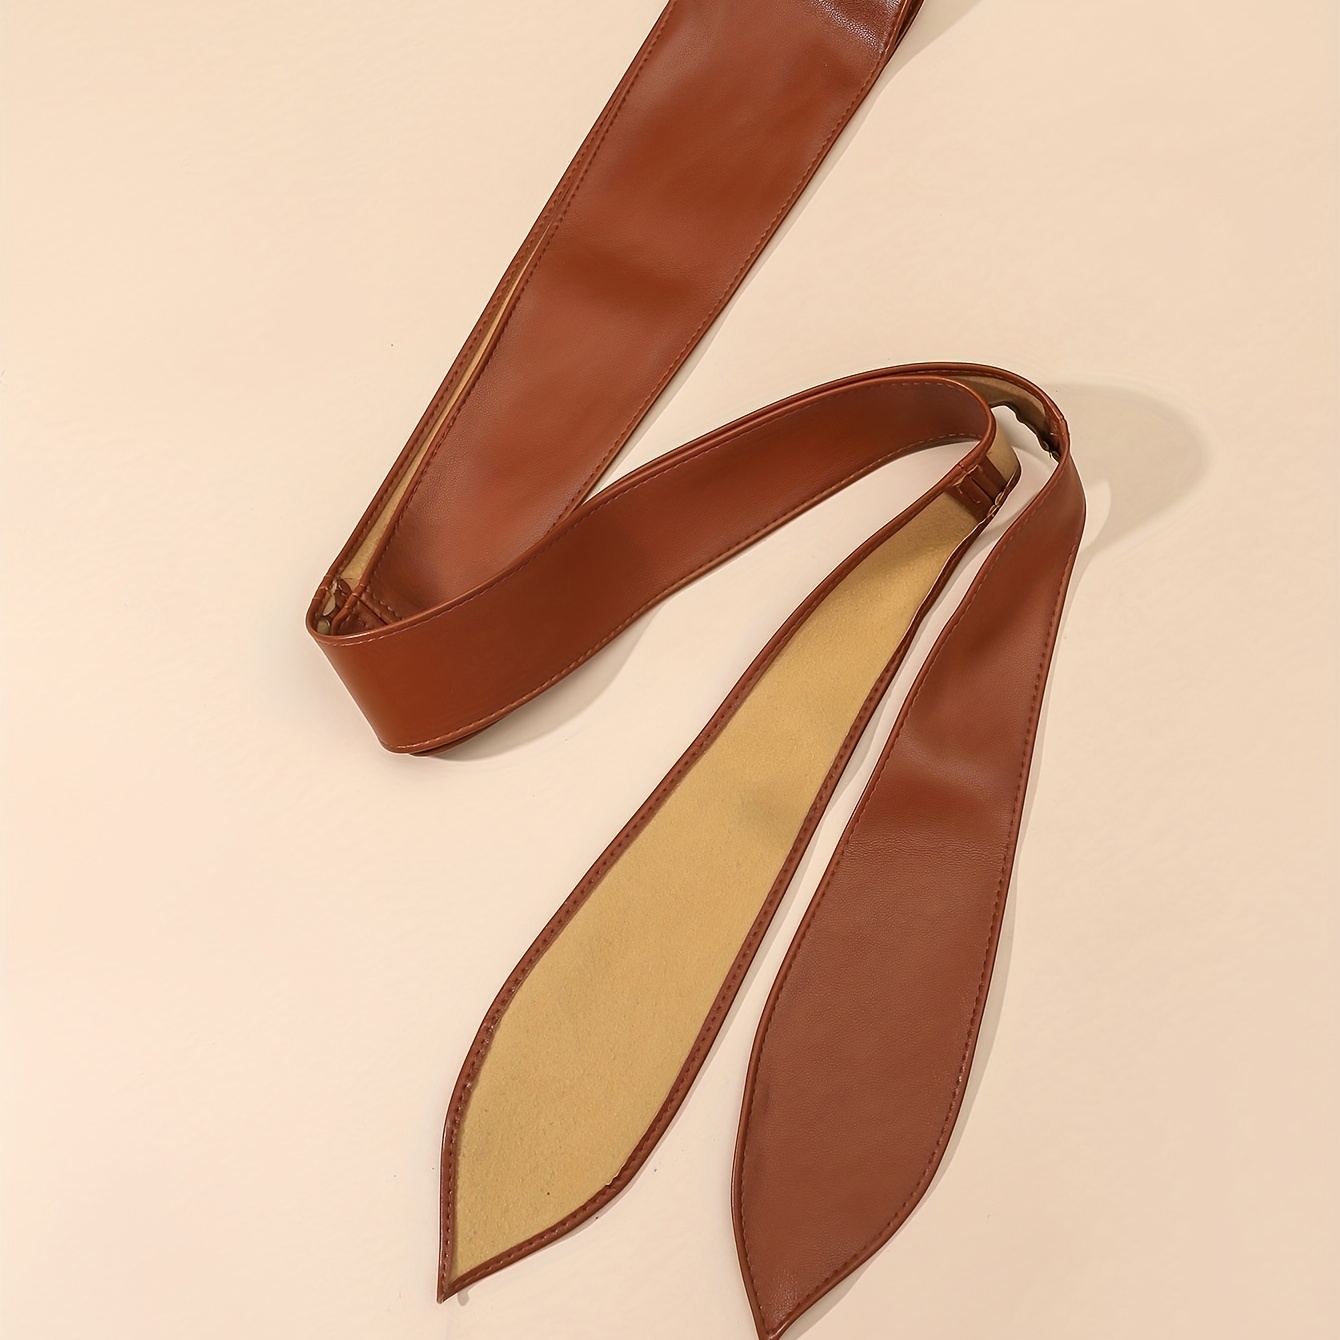 Plus Size Brown Obi Belt Vintage Wide Bowknot Corset Belt For Women Classic  PU Leather Dress Coat Girdle Waspie Belt